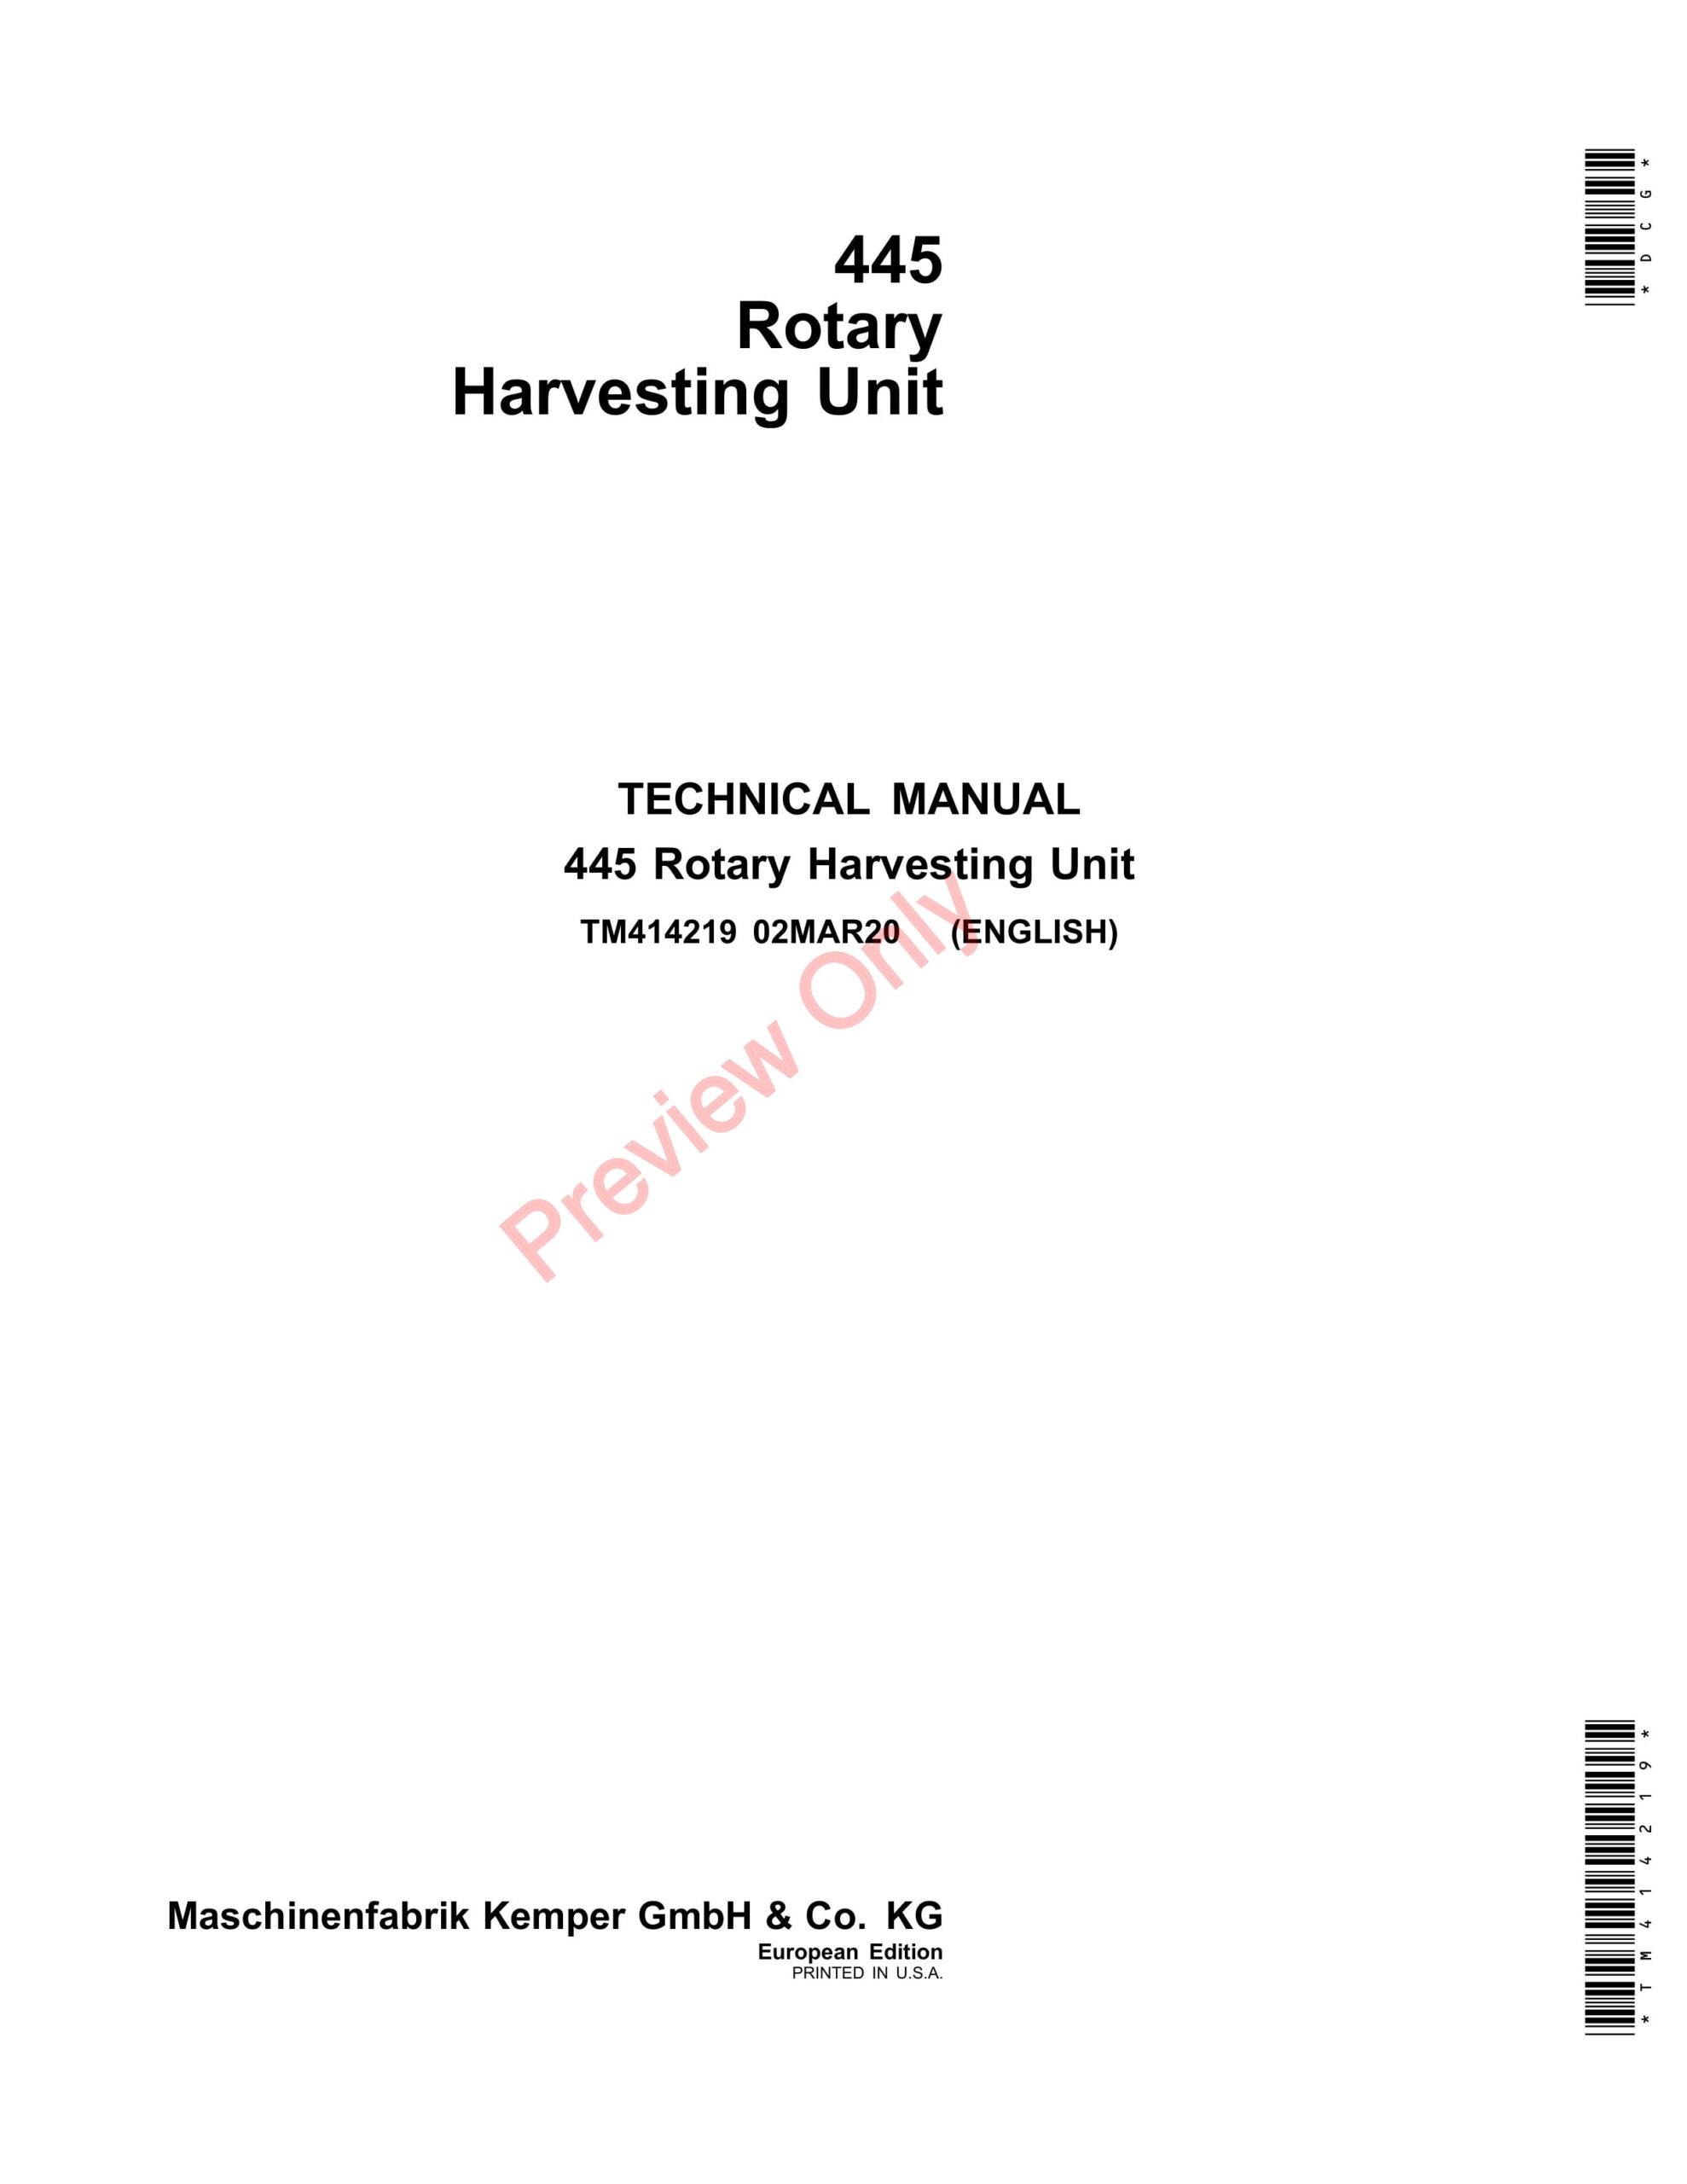 John Deere 445 Rotary Harvesting Unit Technical Manual TM414219 02MAR20-1